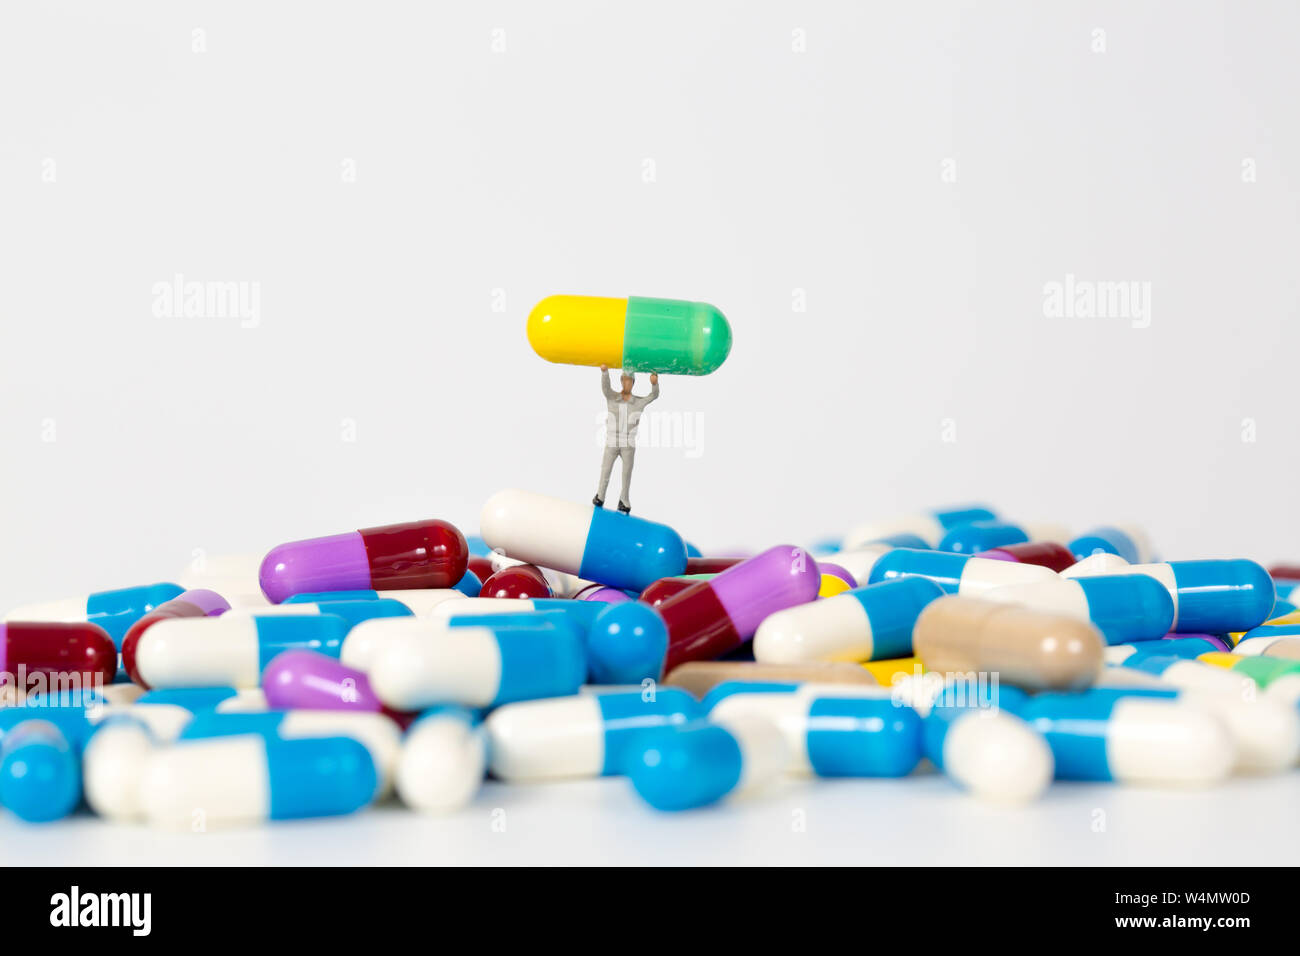 Montón de píldoras de medicina con gente en miniatura sobre fondo blanco Foto de stock